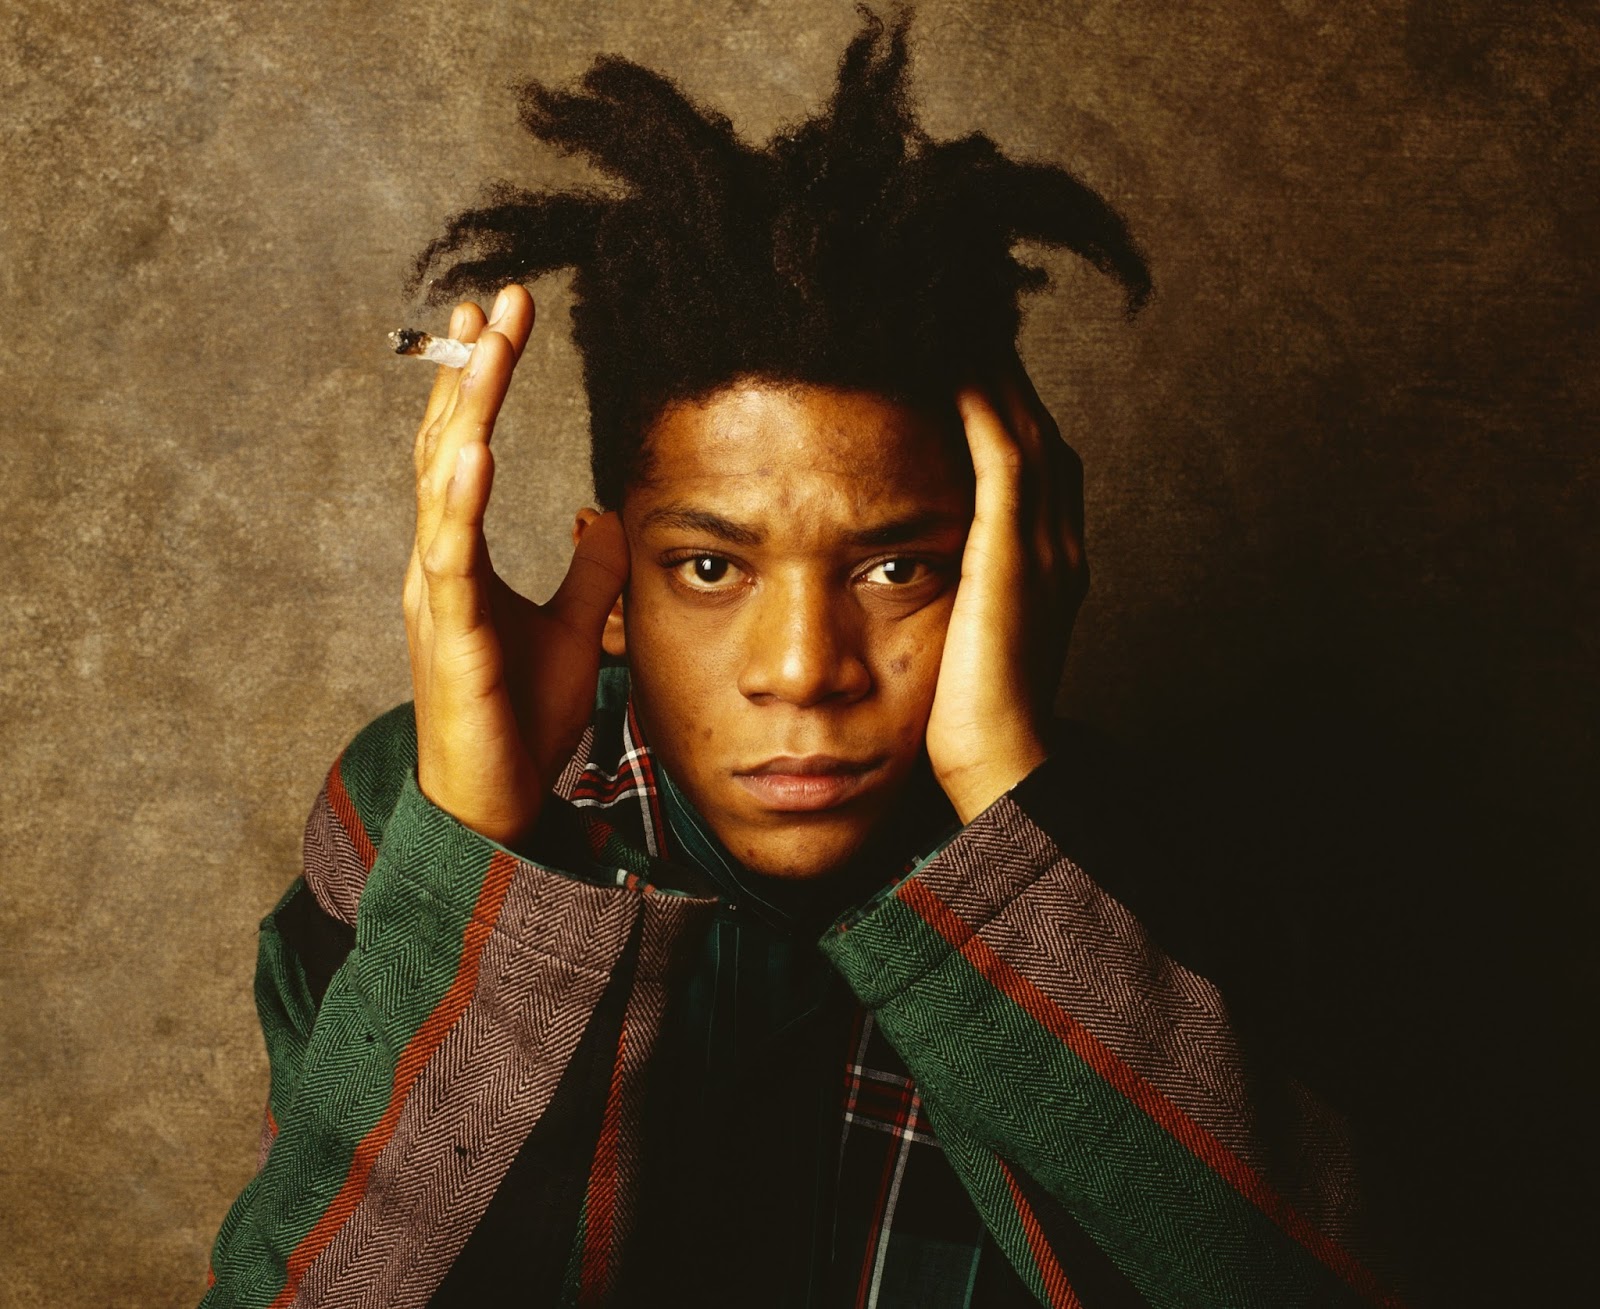 5. "Blond Hair Guy" by artist Jean-Michel Basquiat - wide 3